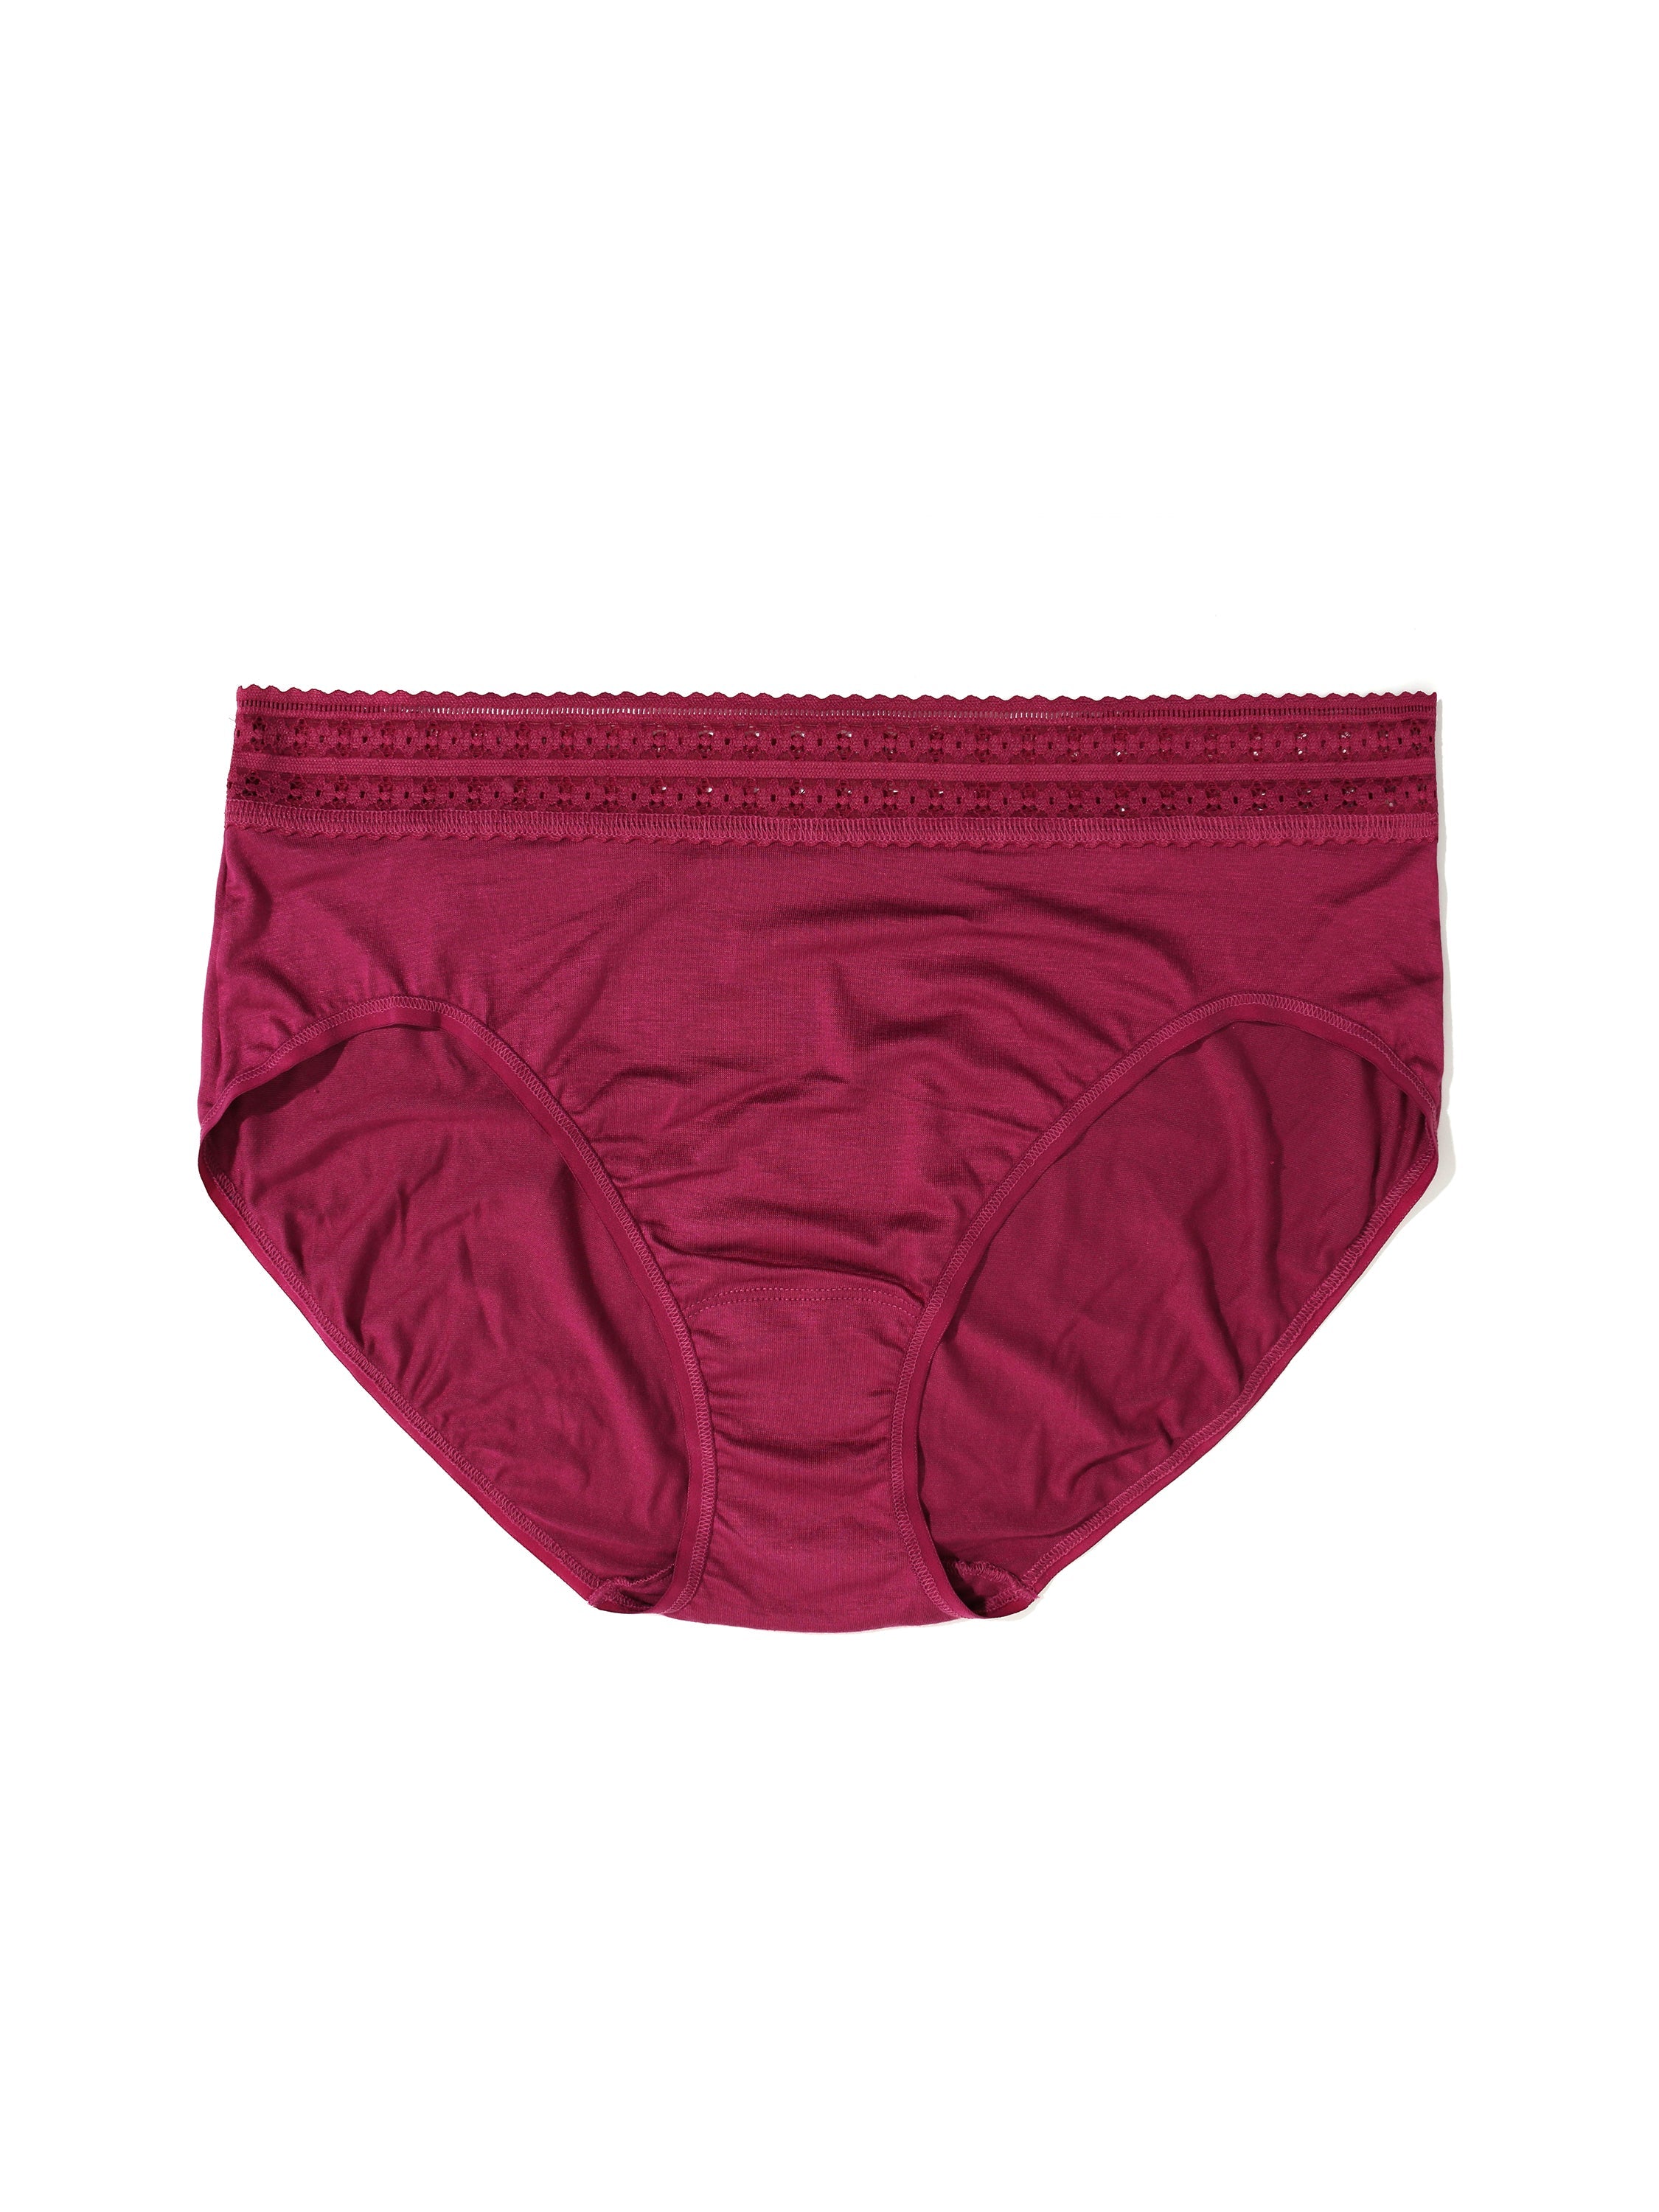 Ensence 4 Pack Seamless Panties Women Lingerie Plus Size Underwear